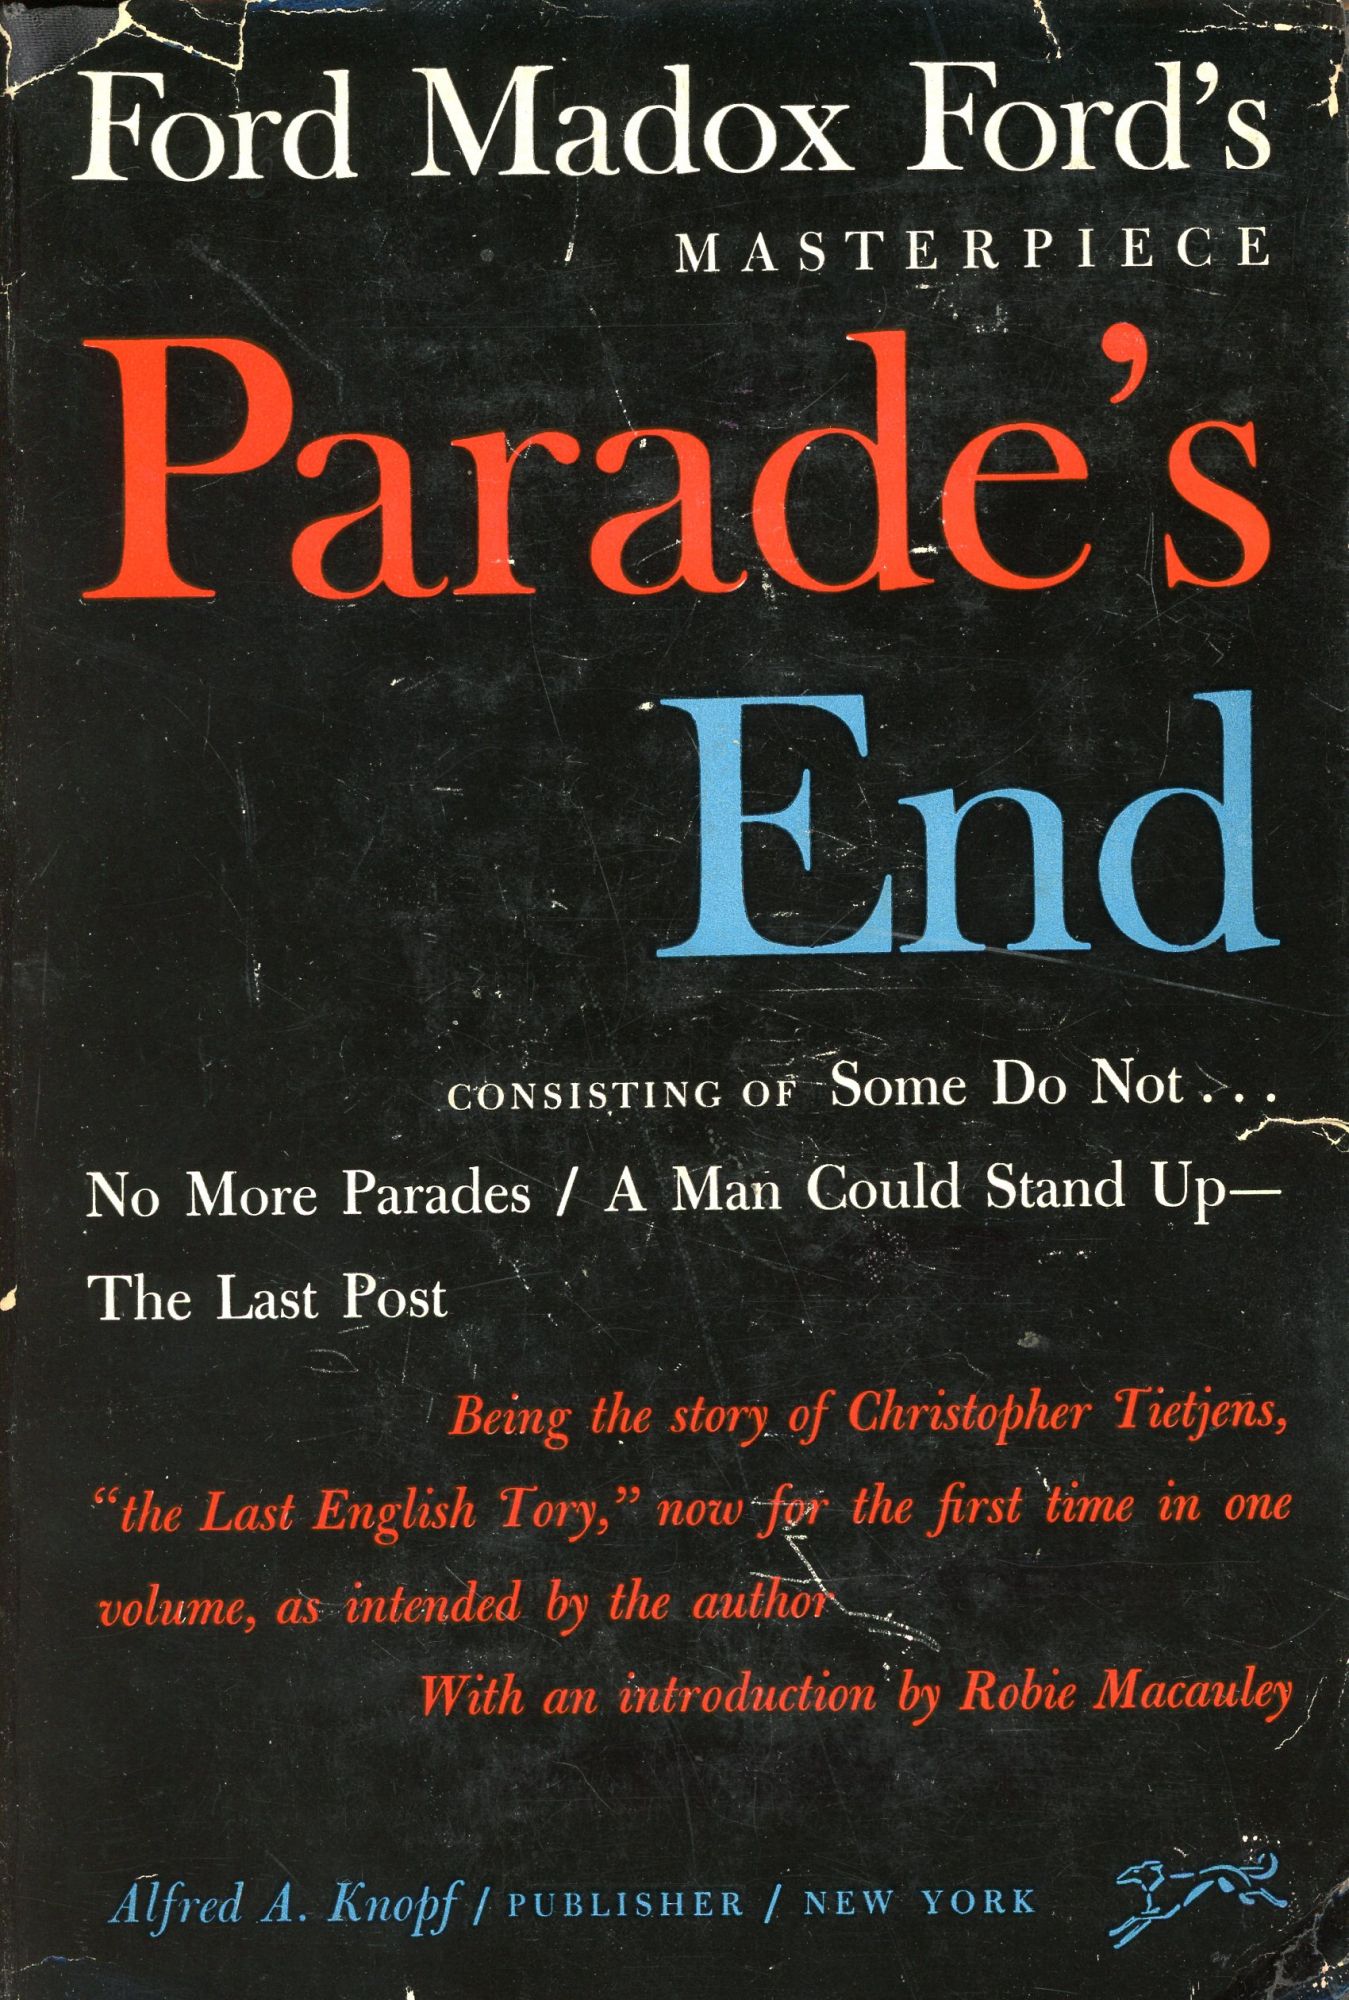 Parade's End